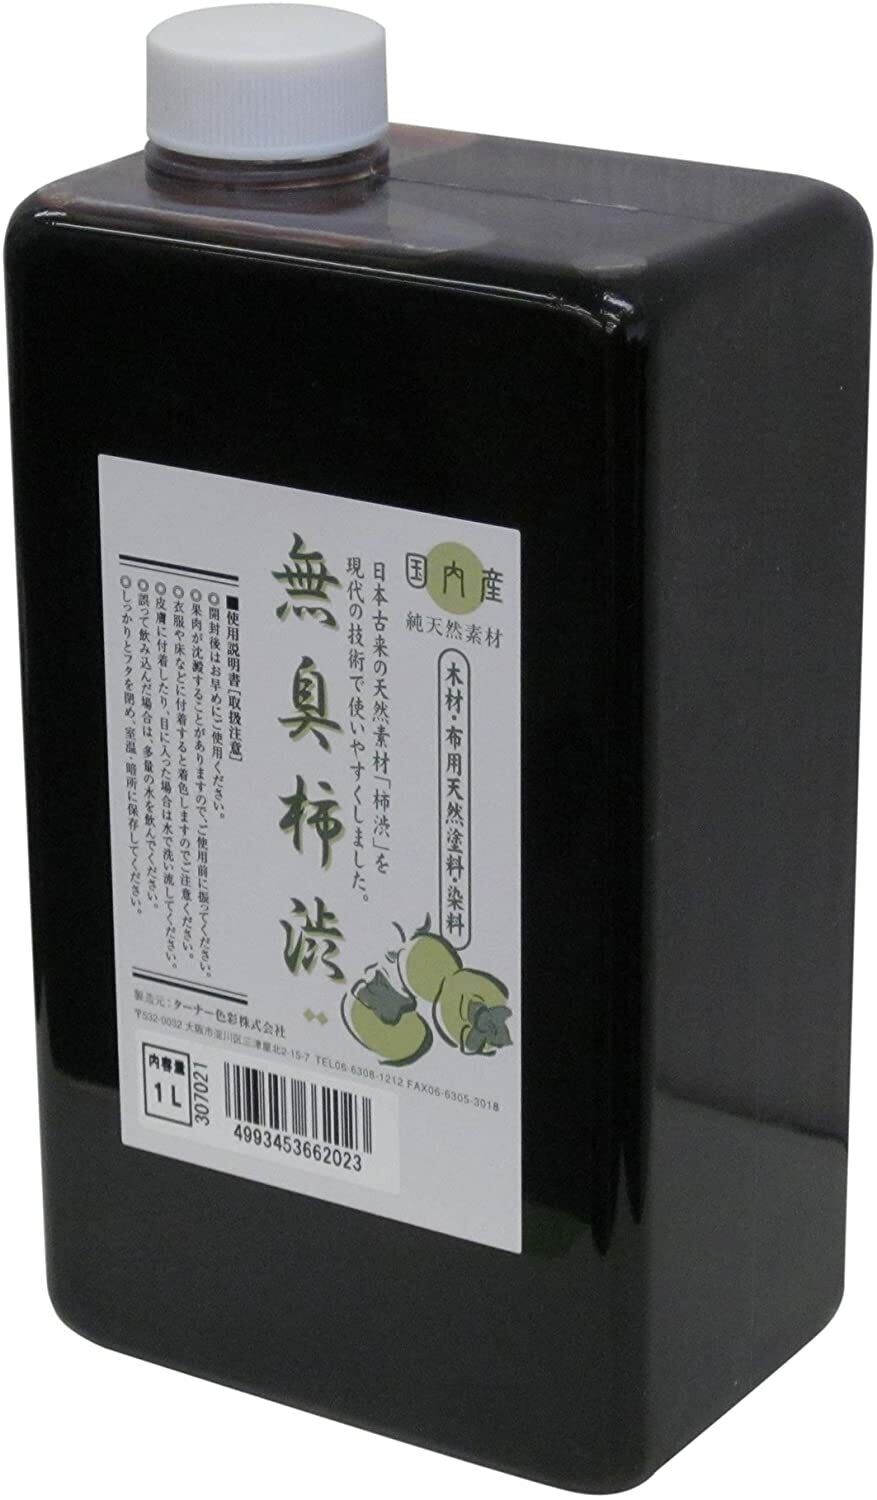 Turner odorless Japanese Persimmon Tannin dye  1000ml MADE in JAPAN Kakishibu